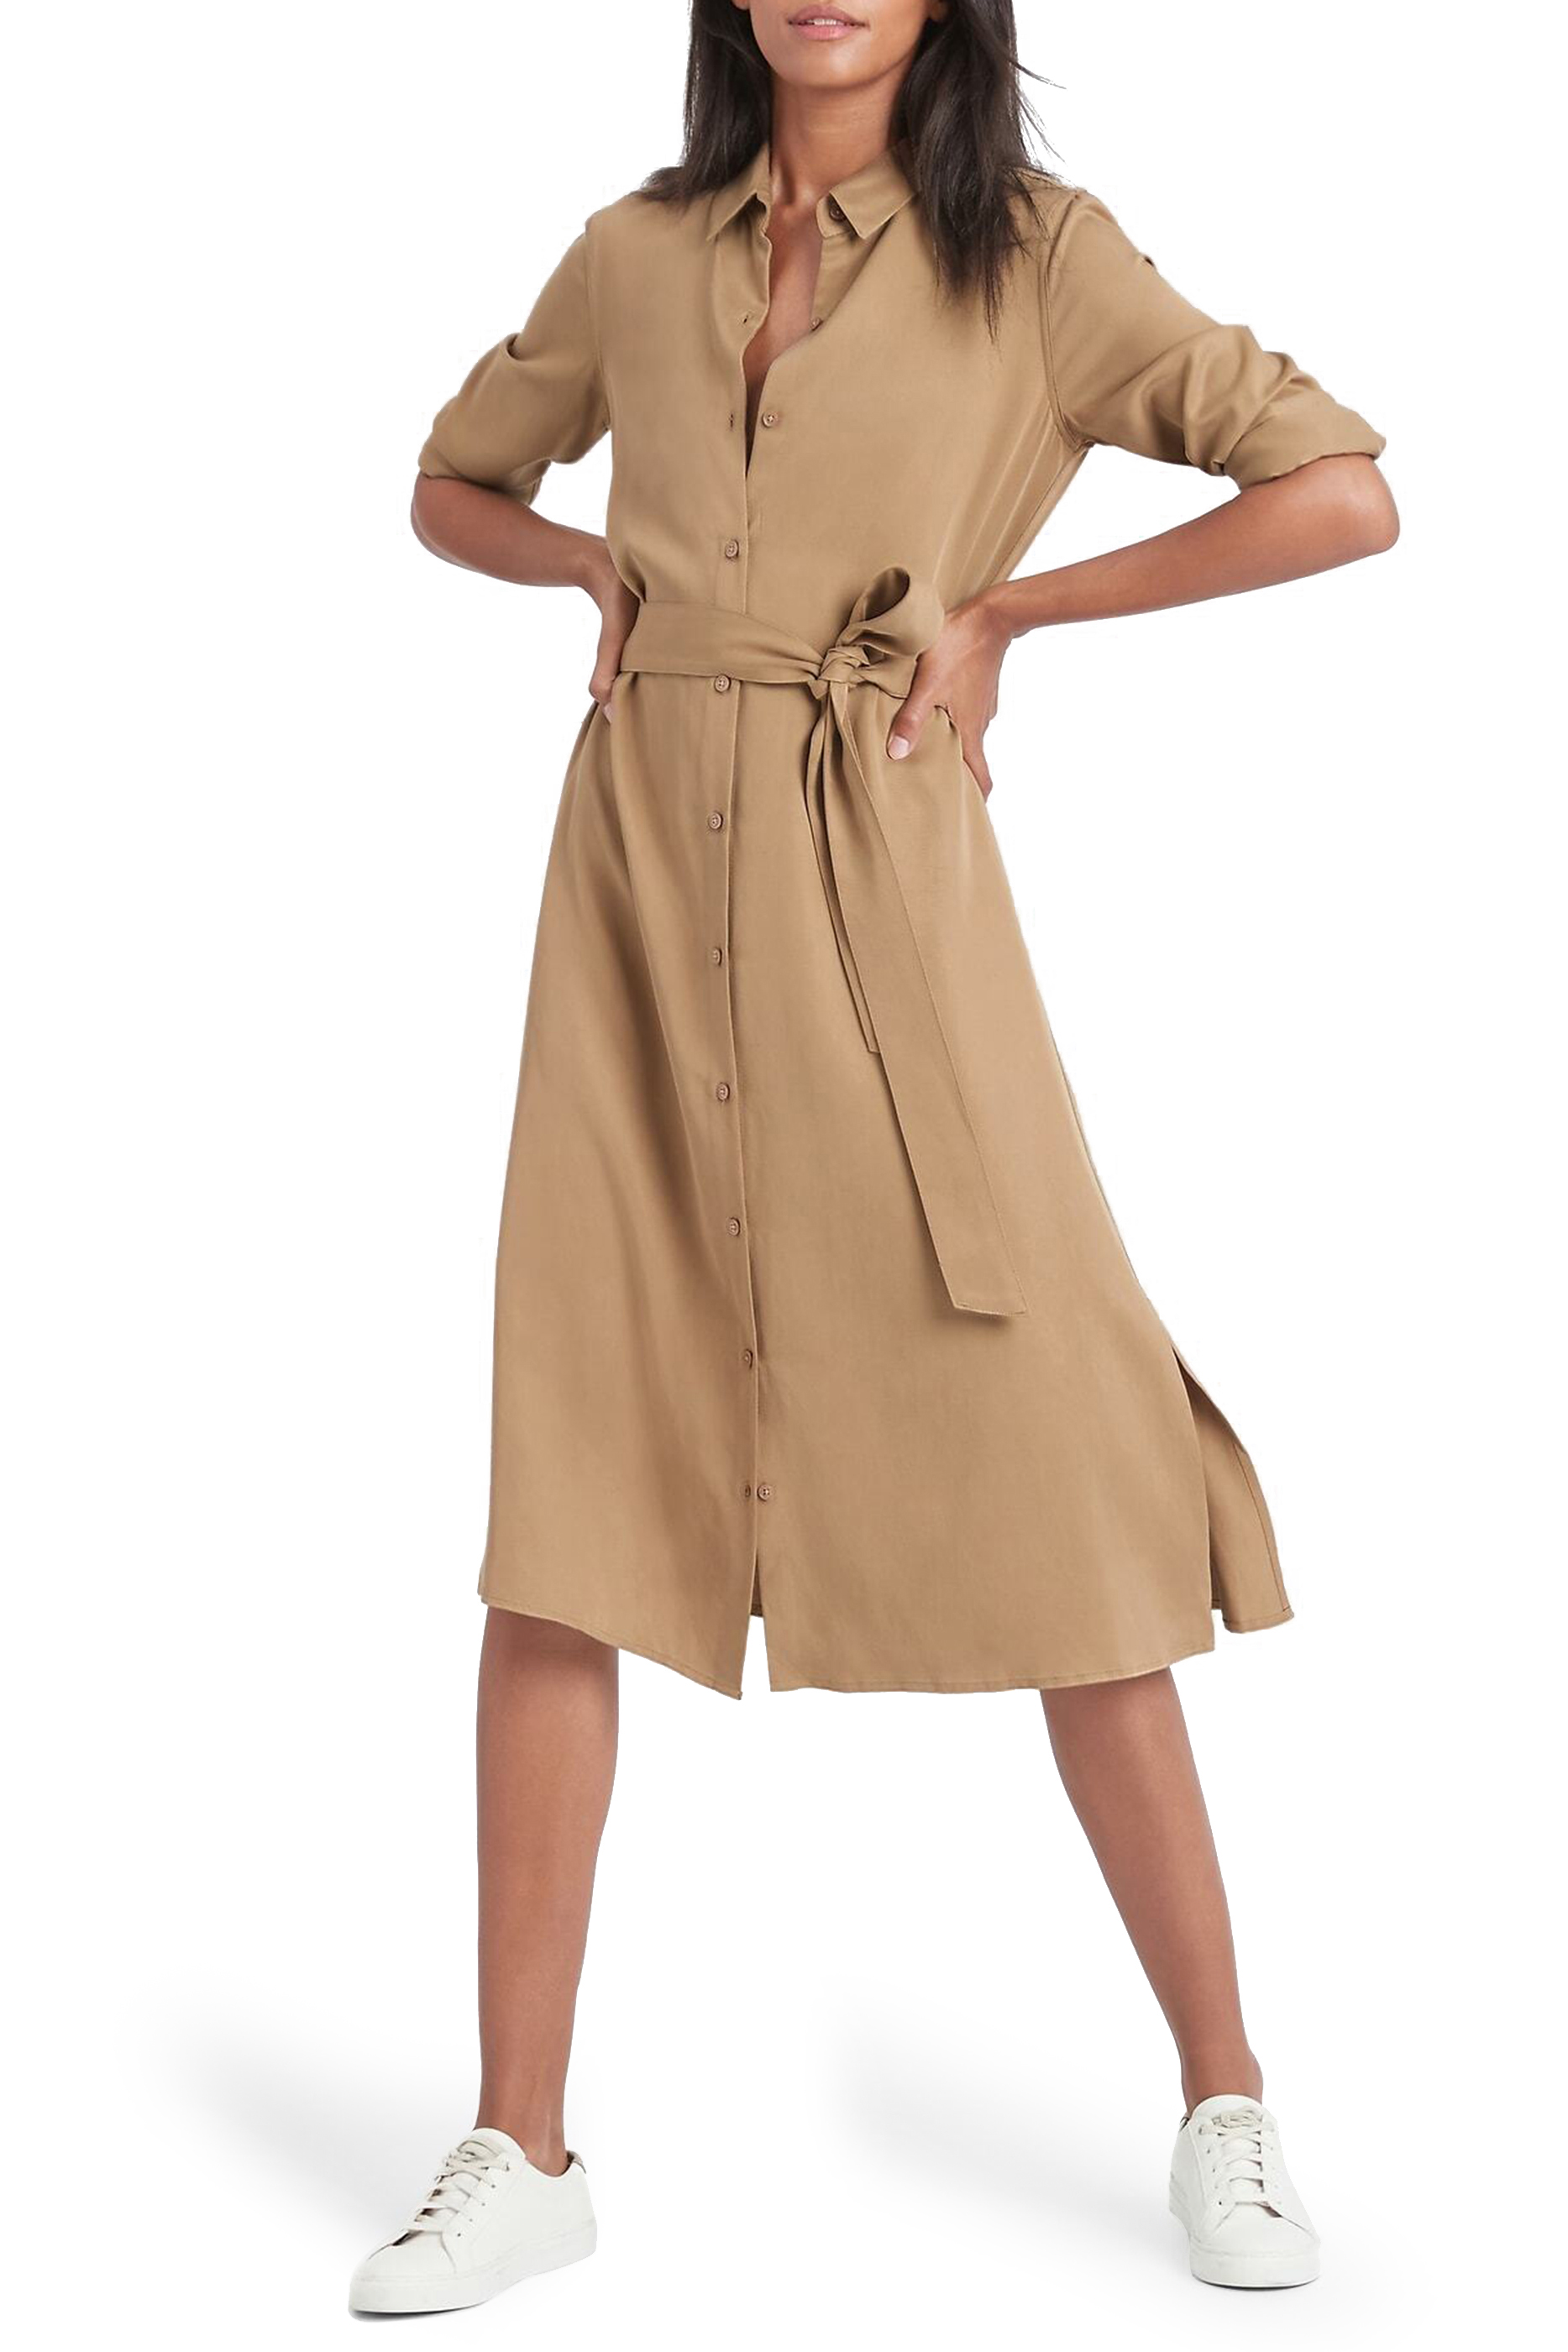 Buy Banana Republic Midi Shirt Dress - Womens for AED 499.00 Dresses